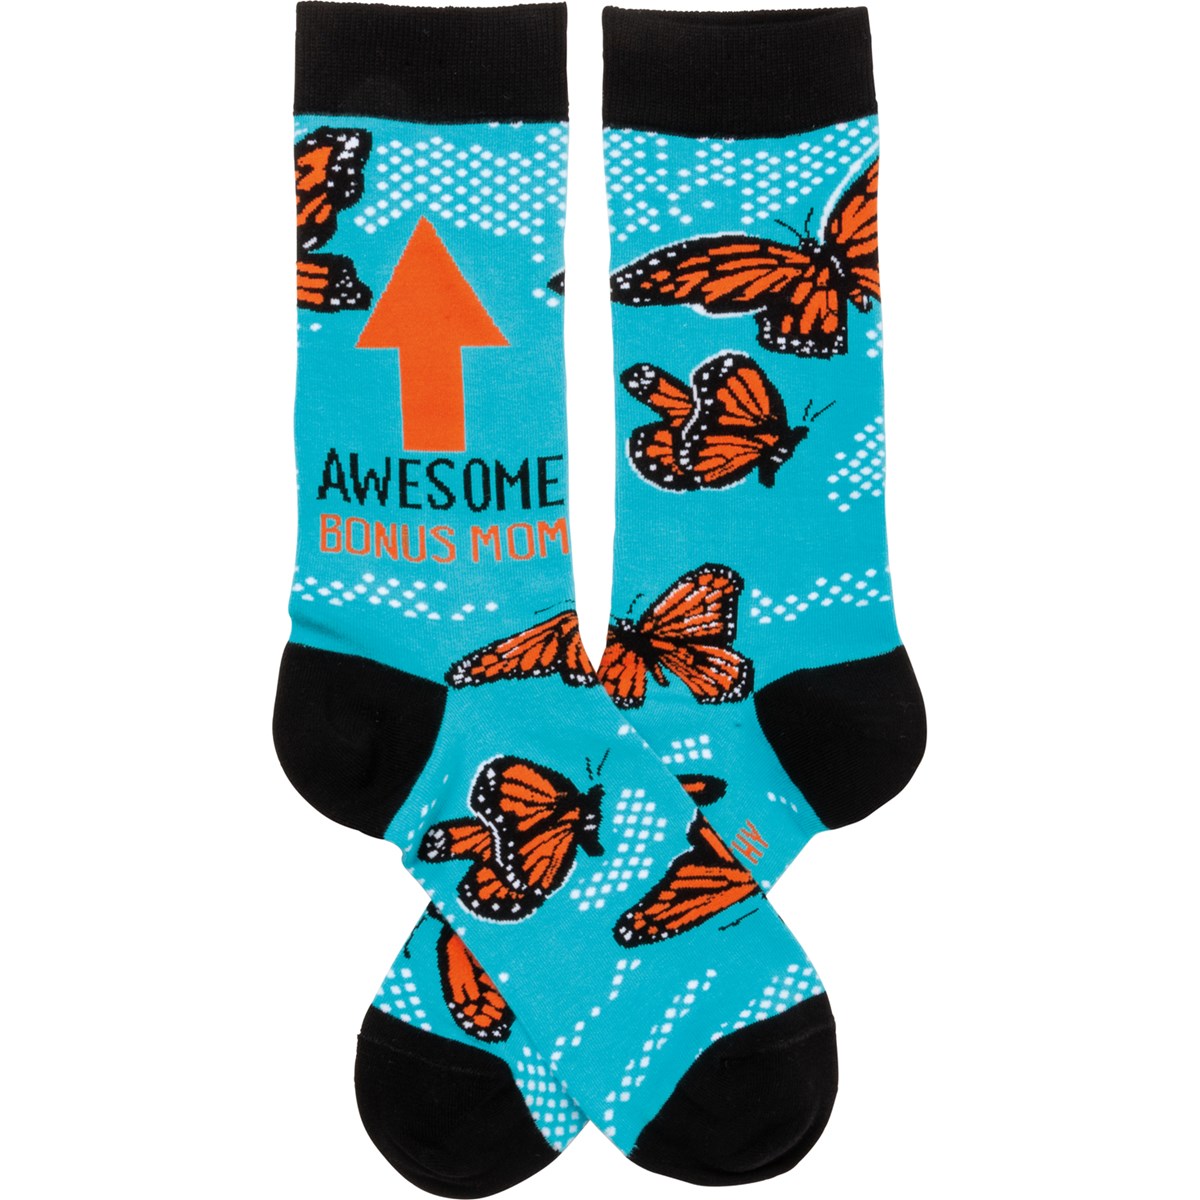 Socks - Awesome Bonus Mom - One Size Fits Most - Cotton, Nylon, Spandex